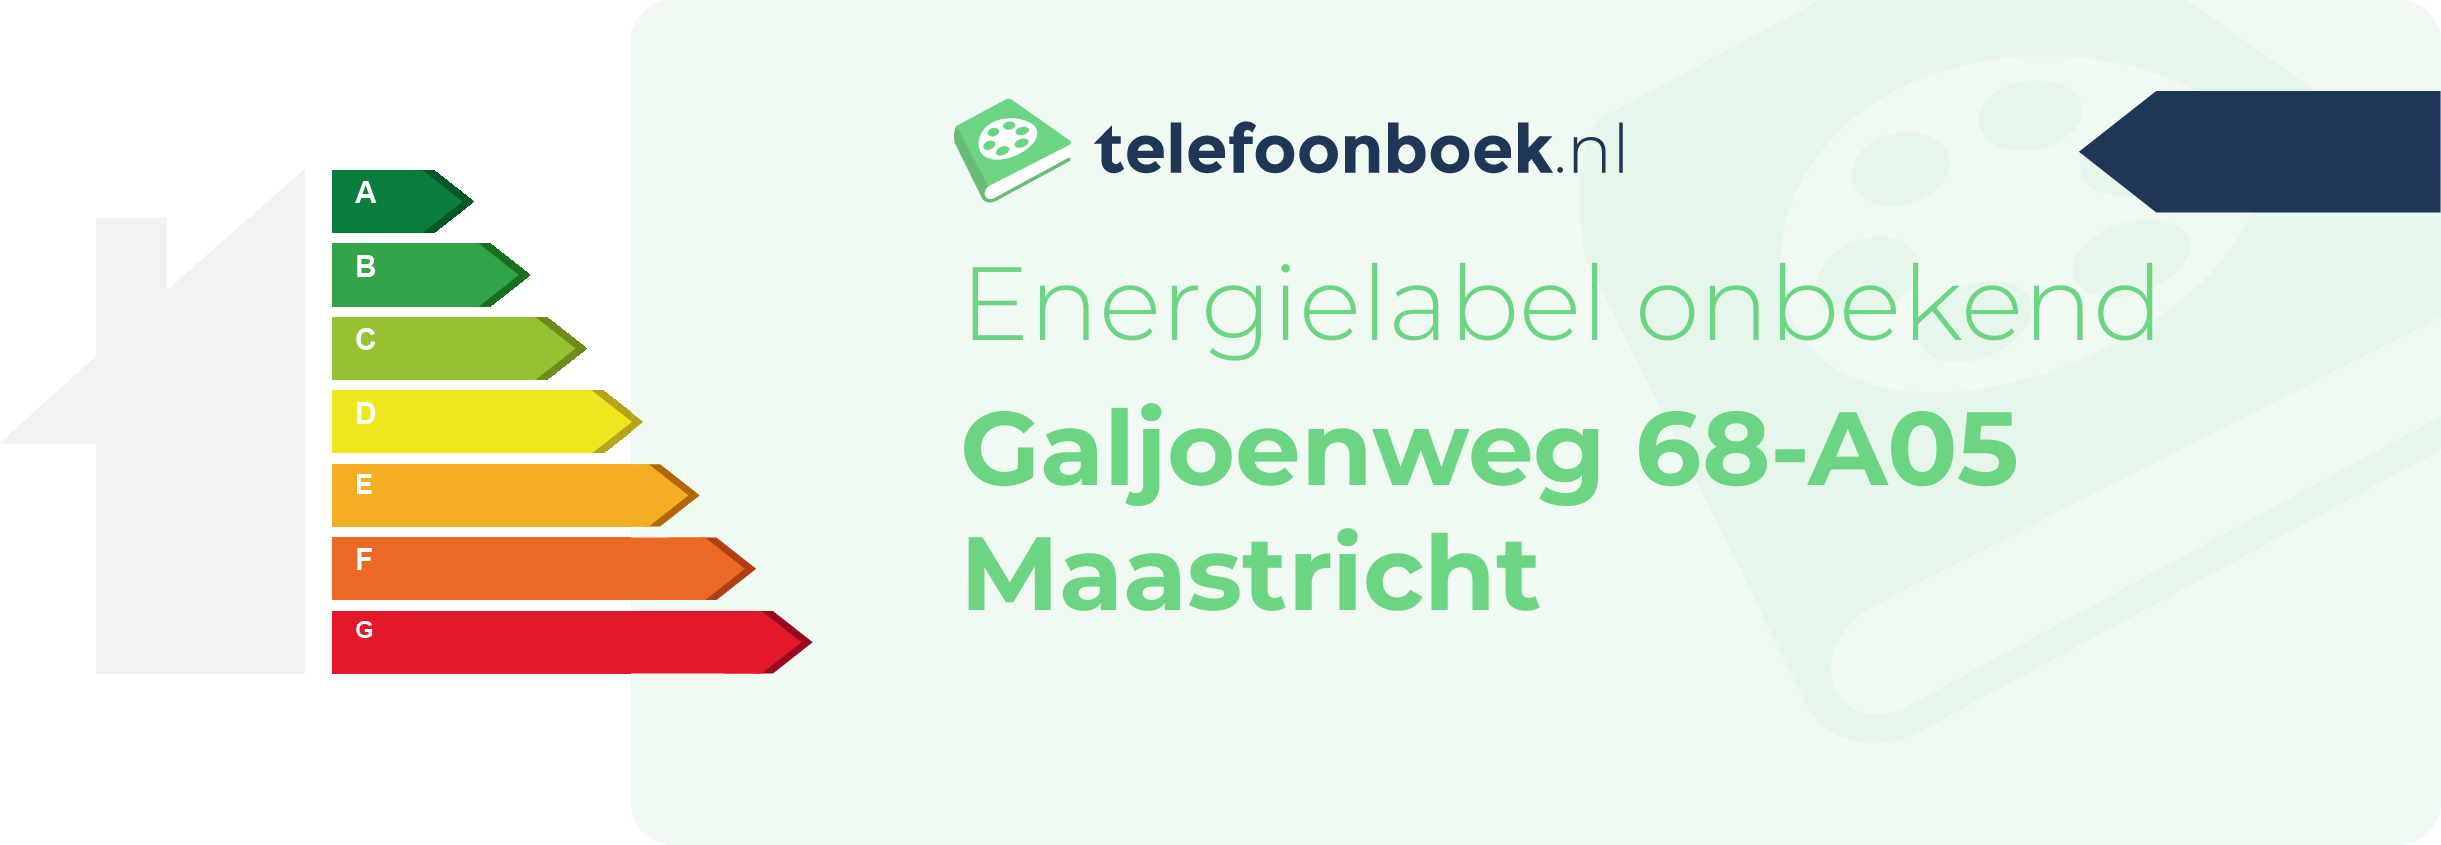 Energielabel Galjoenweg 68-A05 Maastricht